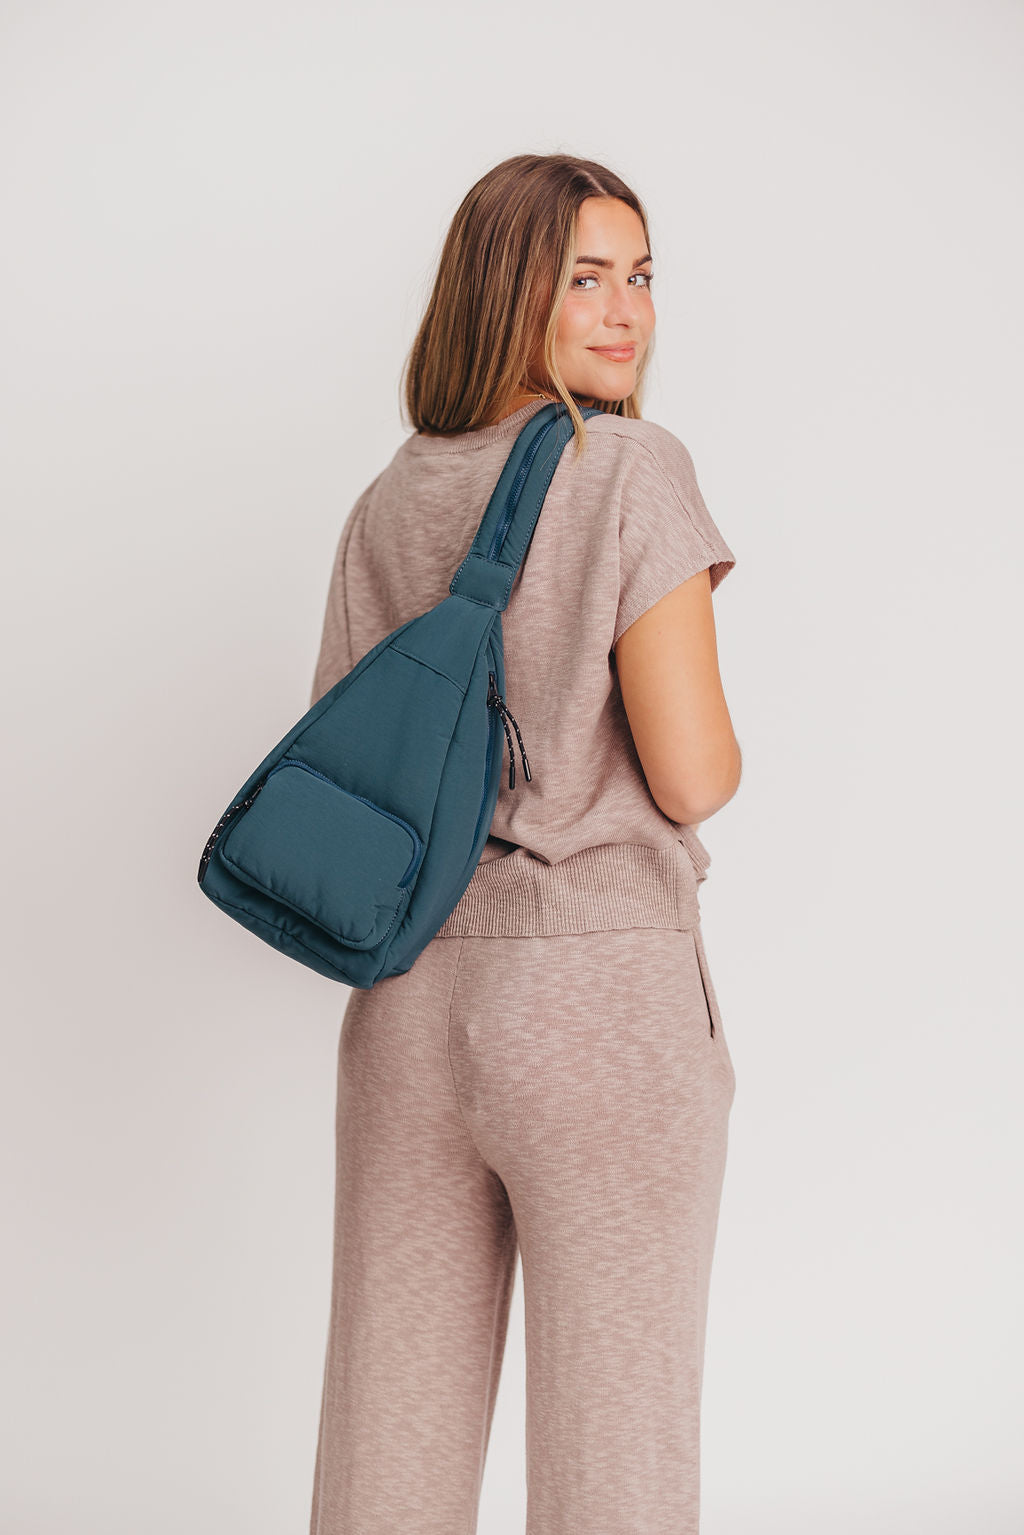 Sloane Convertible Sling Bag/Backpack in Blue